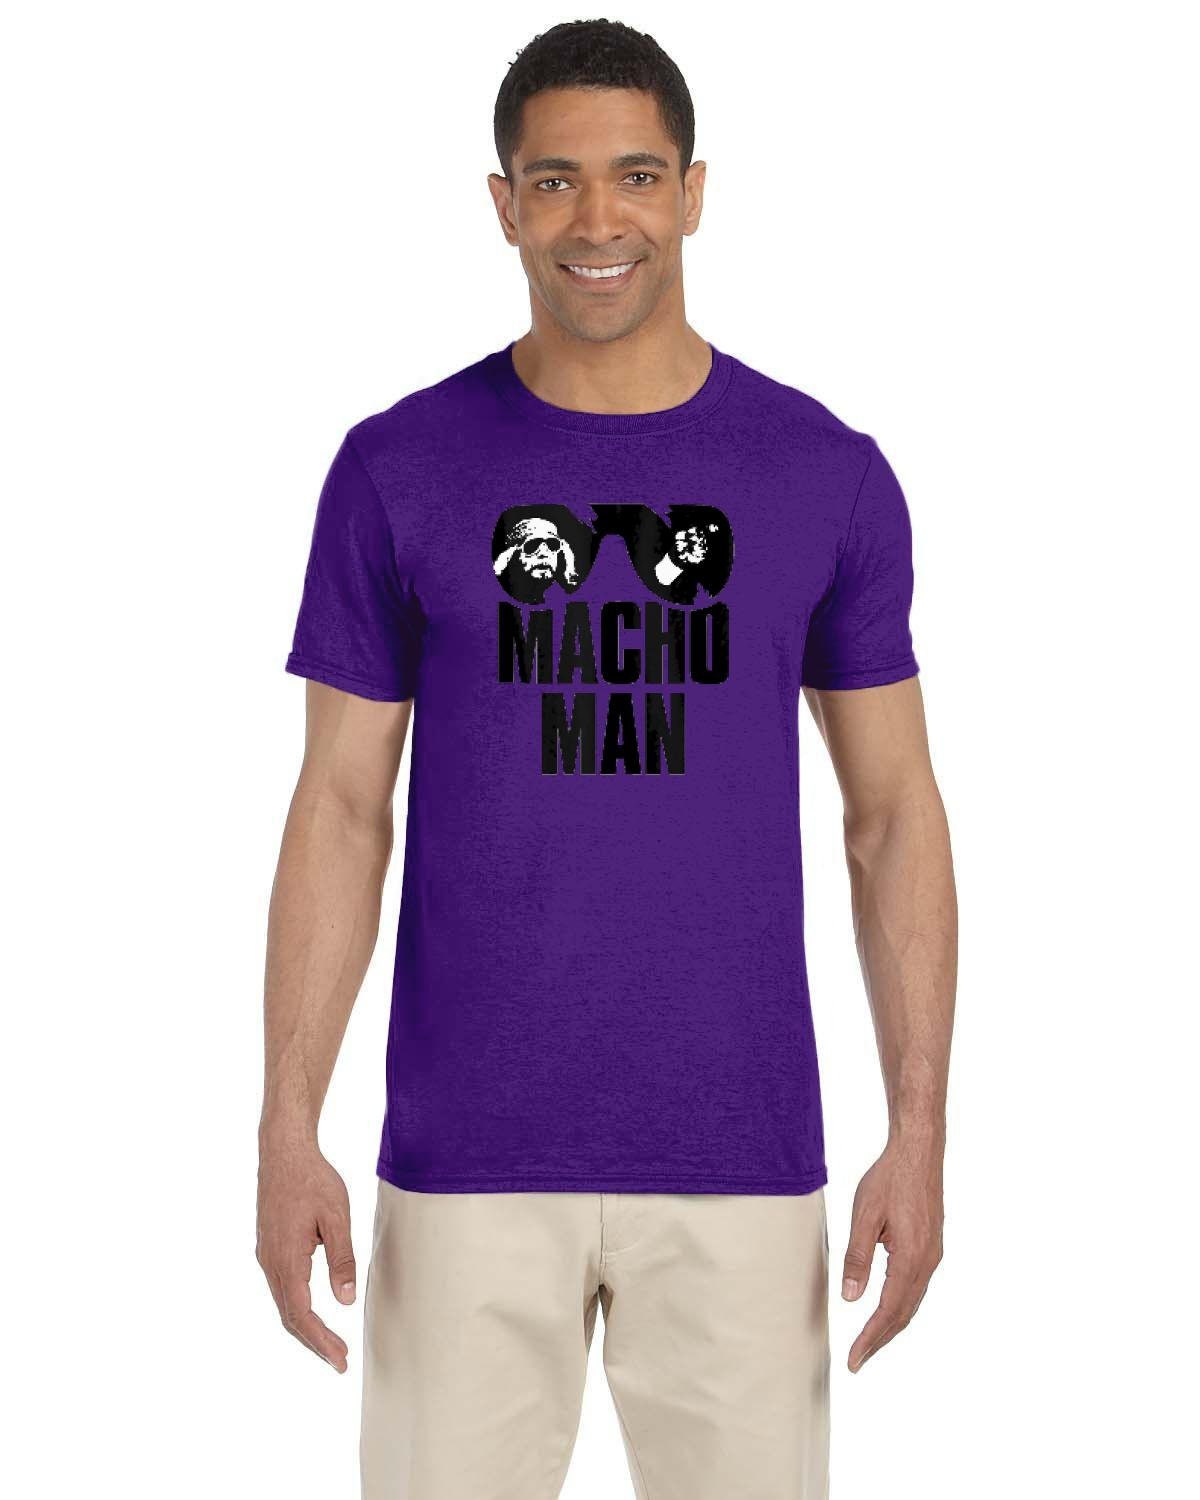 Discover Macho Man Caricature Unisex Tshirt